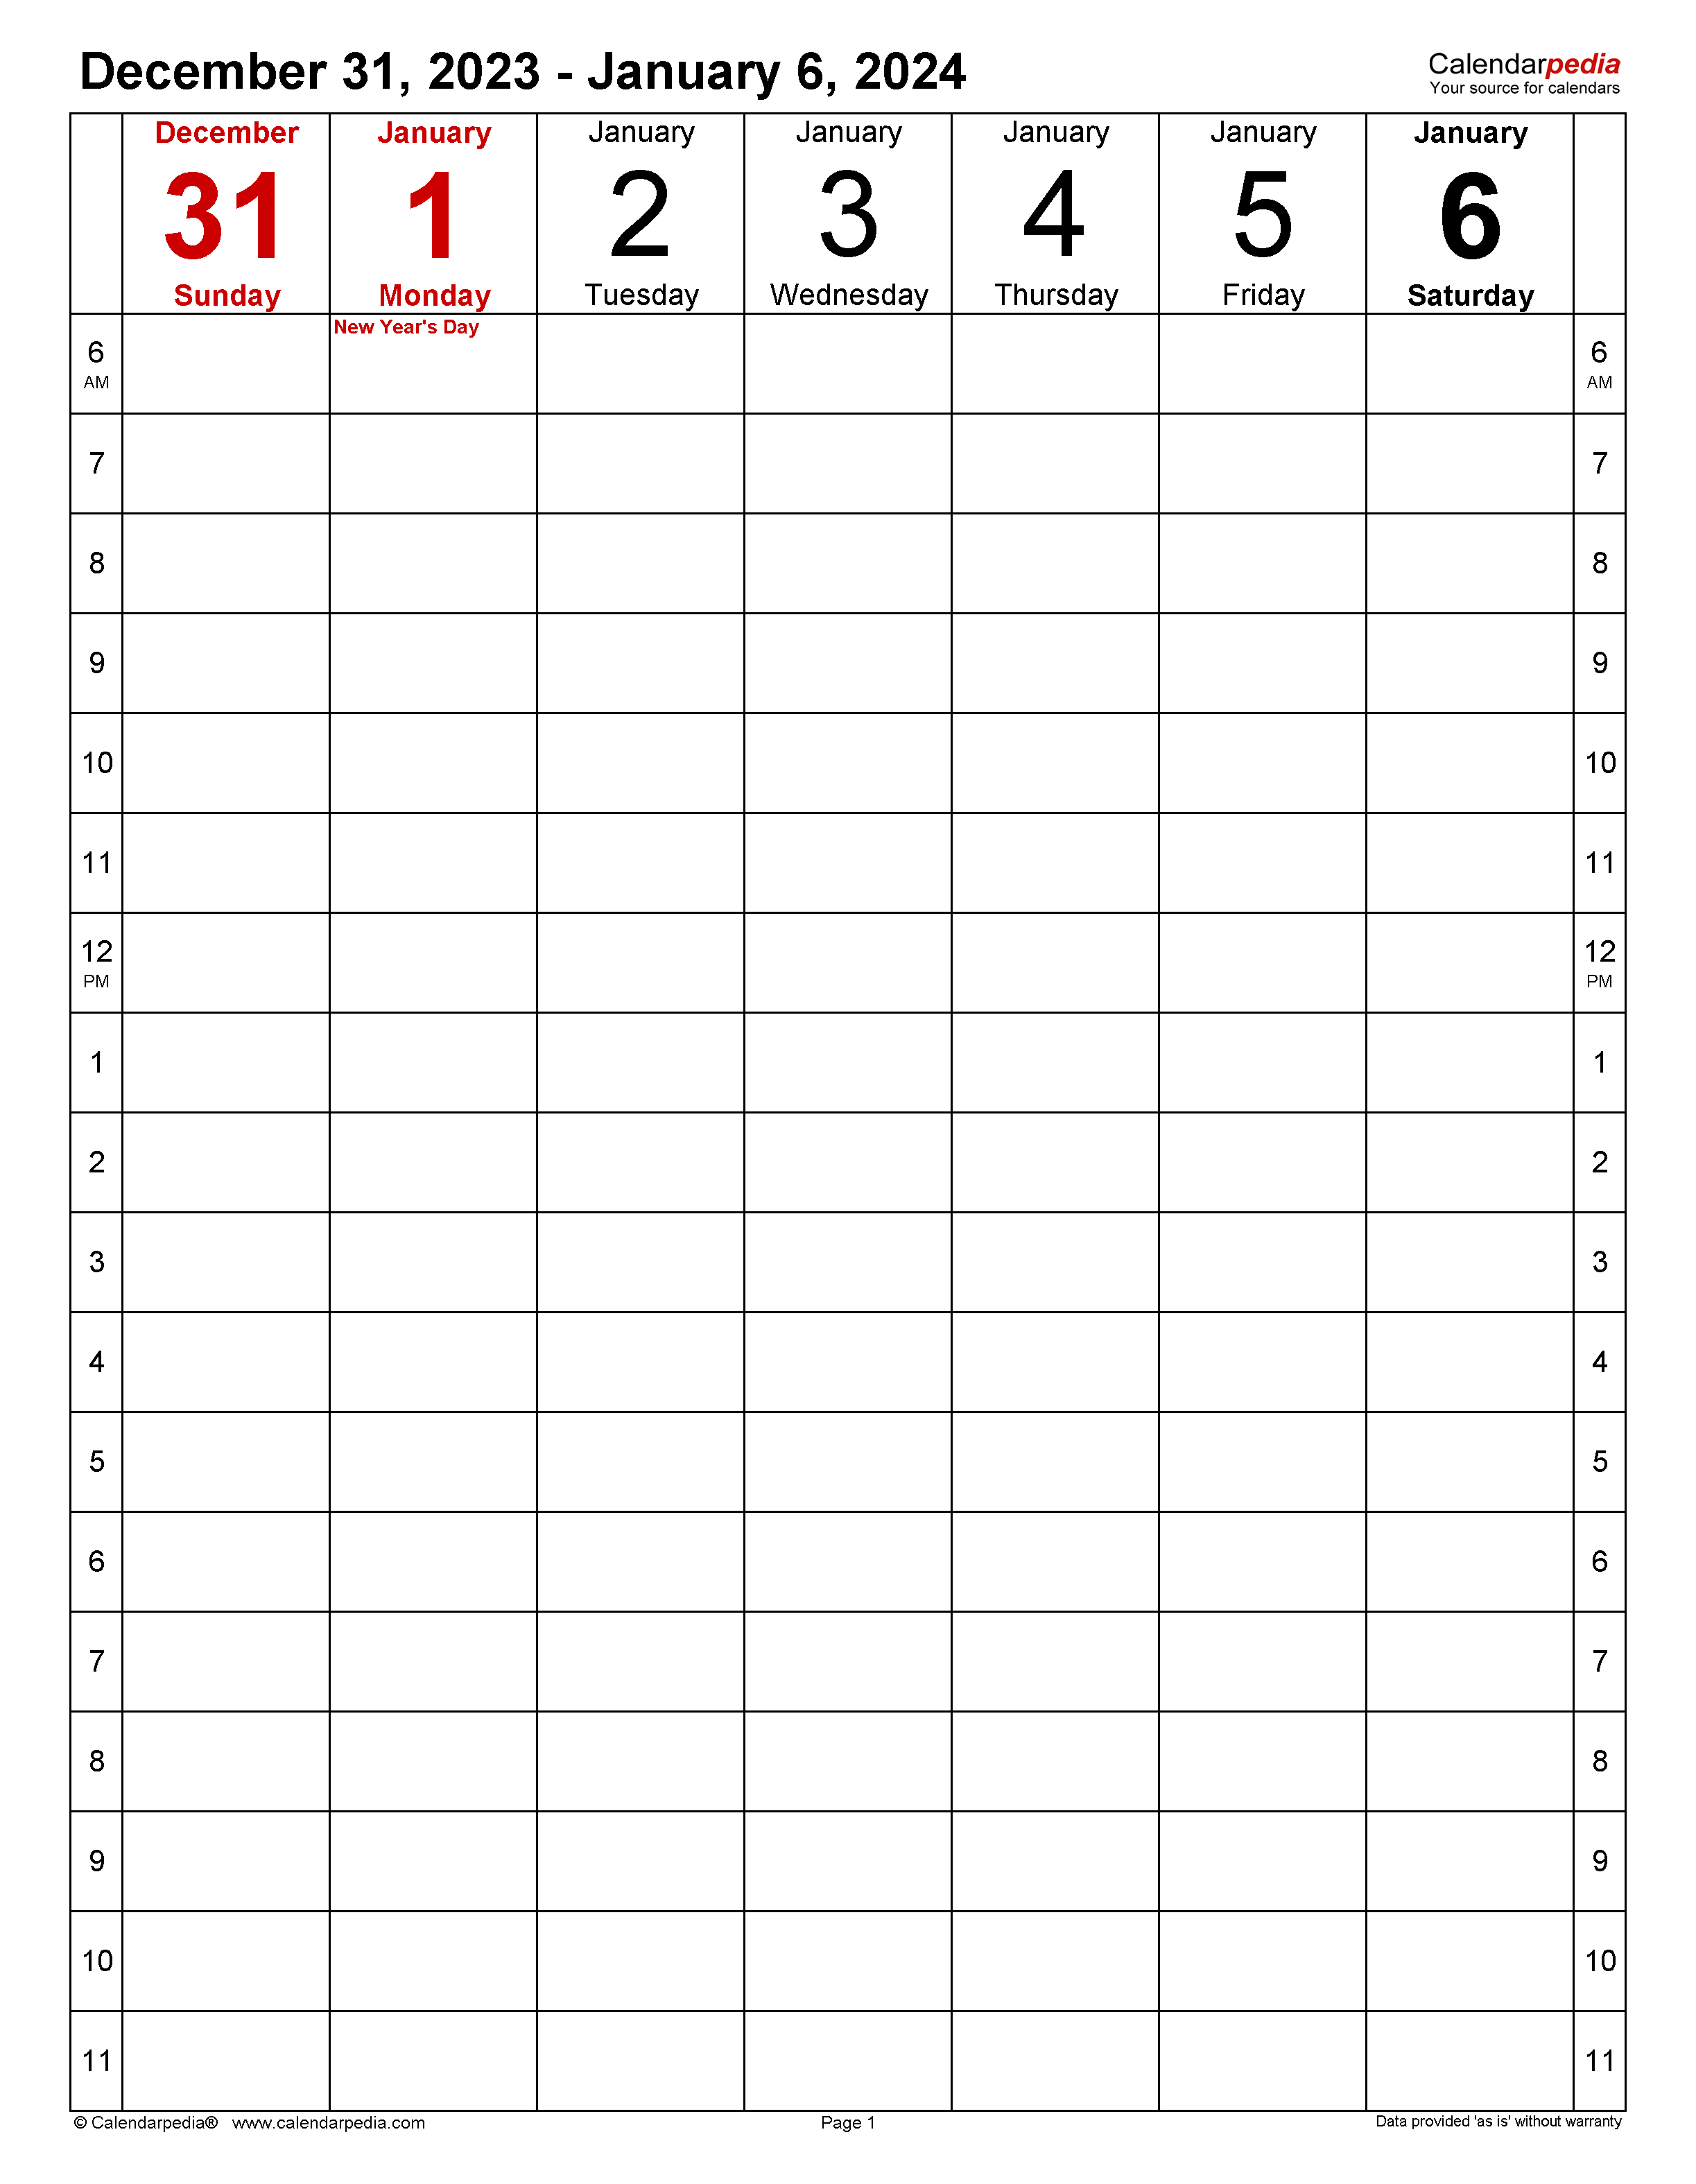 Weekly Calendars 2024 For Pdf - 12 Free Printable Templates for 2024 Weekly Calendar Printable